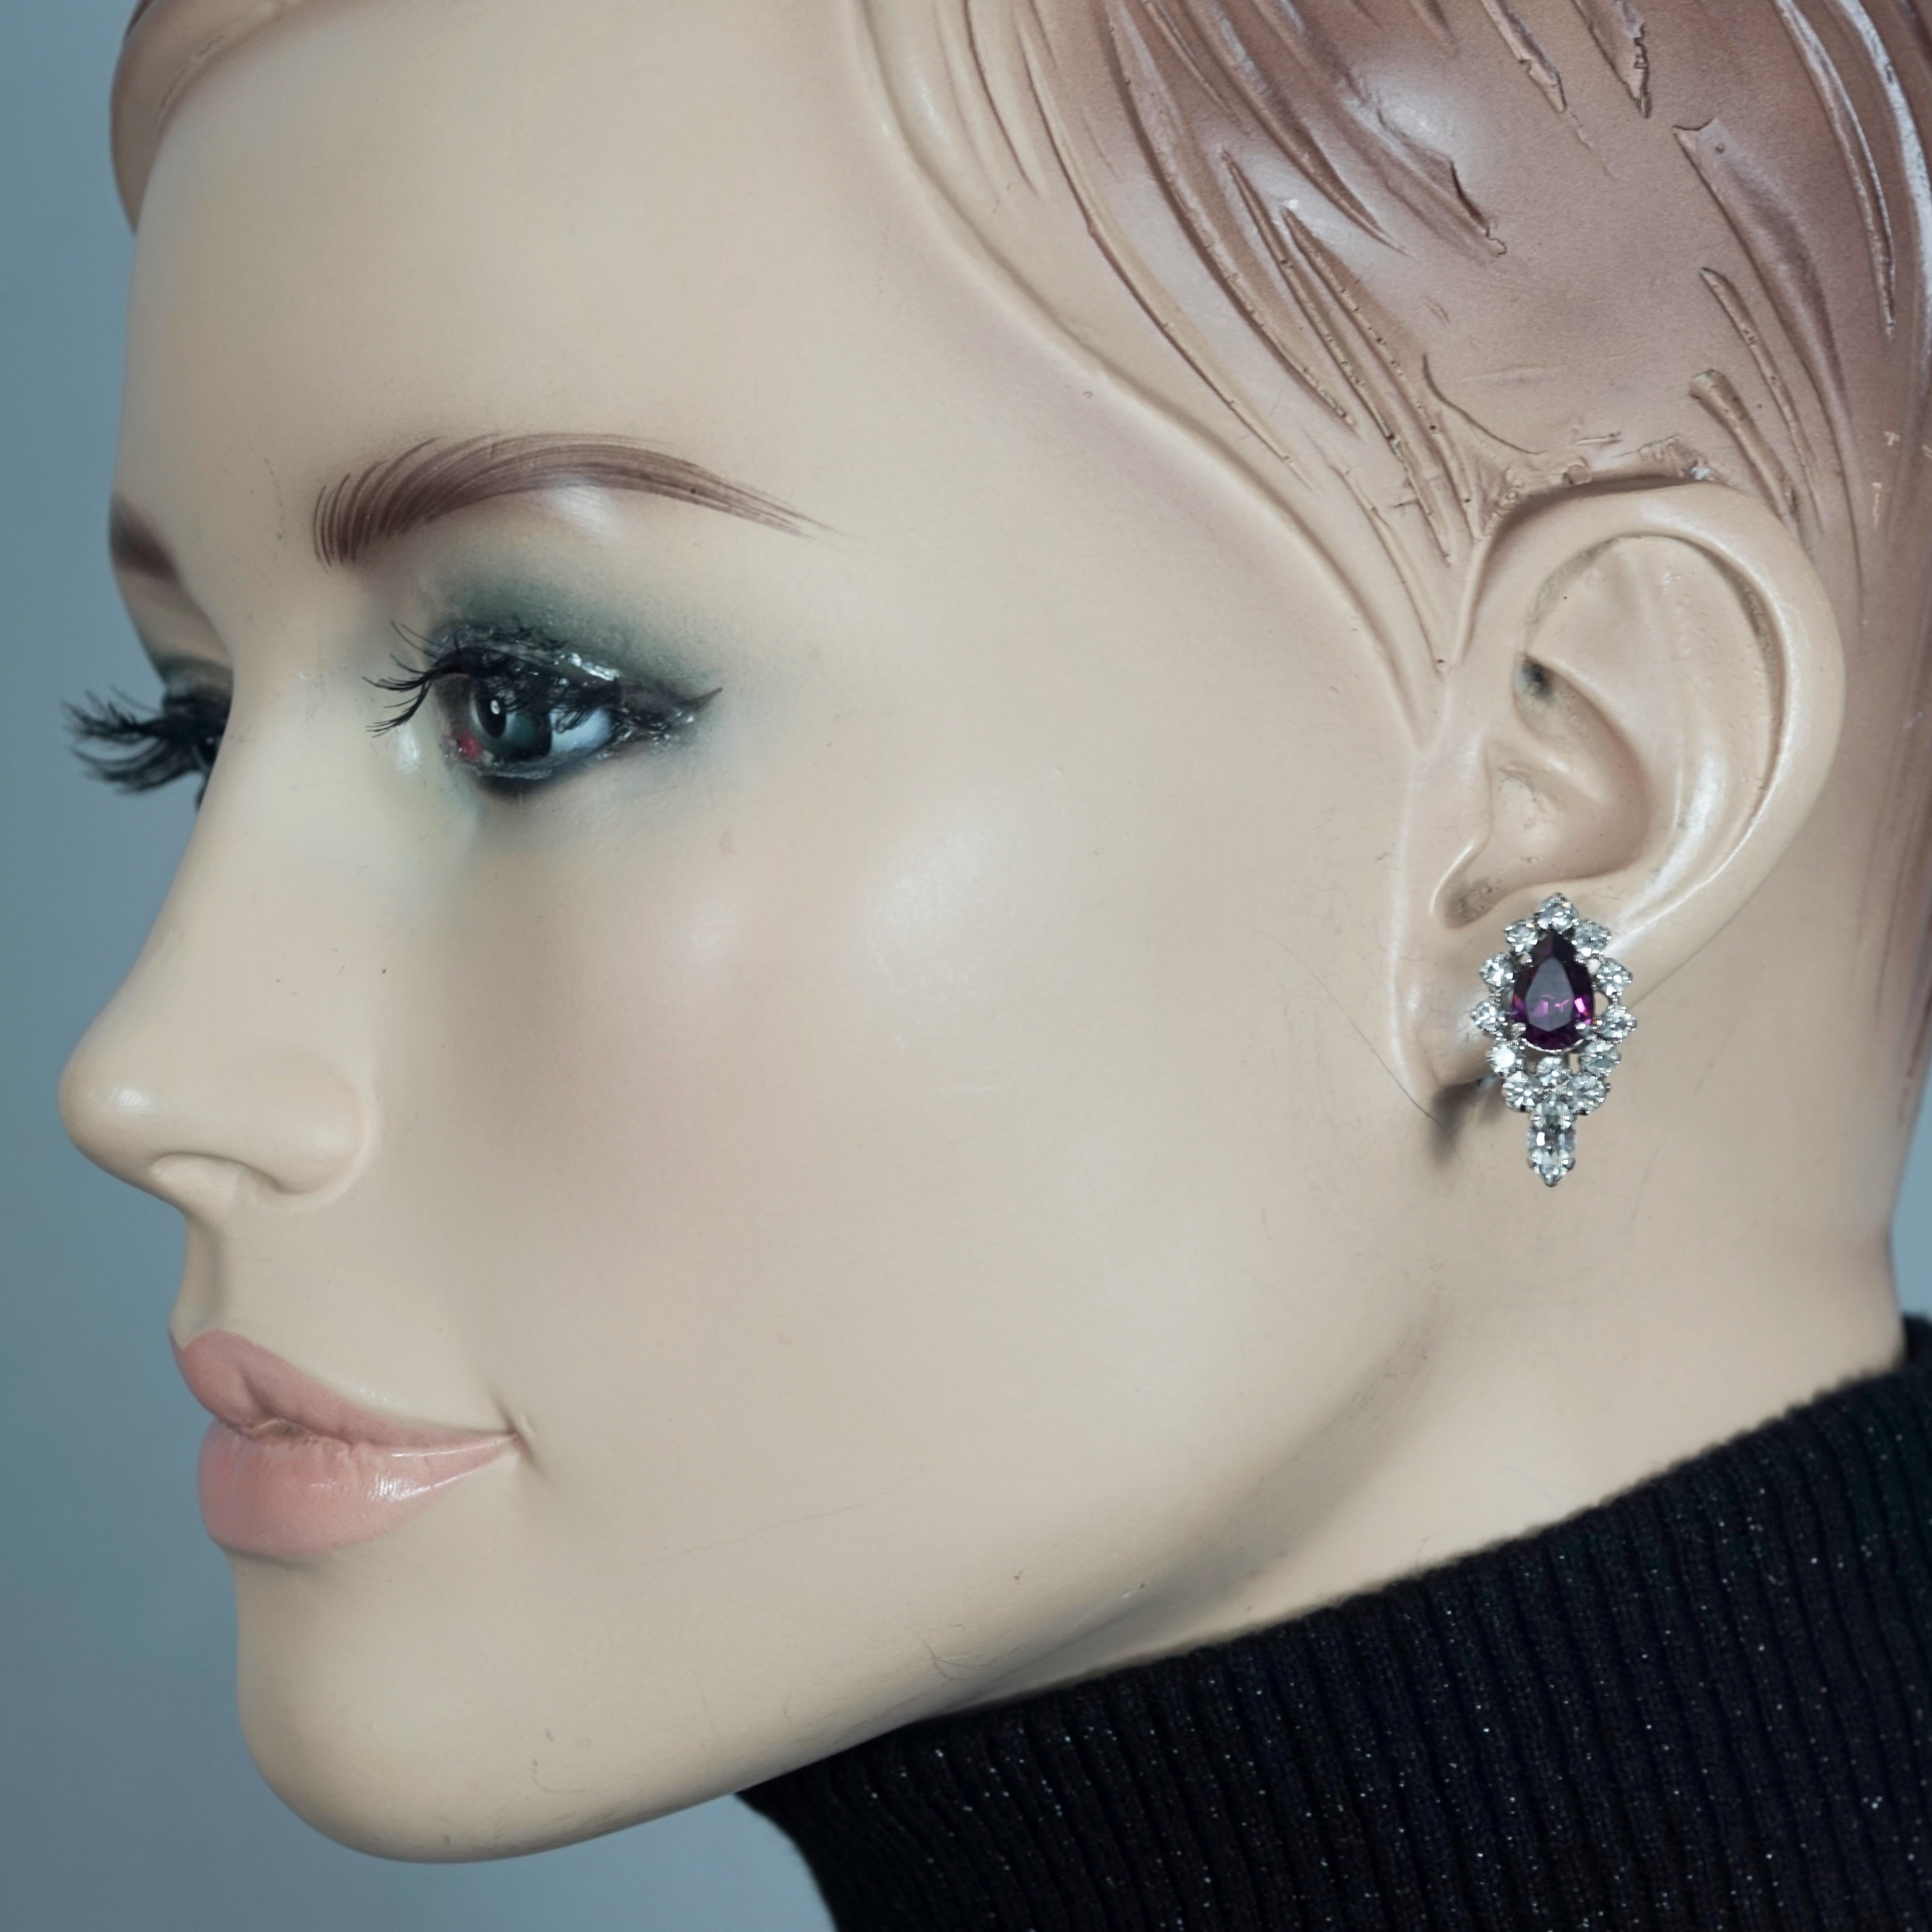 Vintage CHRISTIAN DIOR Purple Amethyst Rhinestone Earrings

Measurements:
Height: 0.98 inch (2.5 cm)
Width: 0.55 inch (1.4 cm)
Weight per Earring: 3 grams

Features:
- 100% Authentic CHRISTIAN DIOR.
- Purple amethyst pear and clear rhinestones